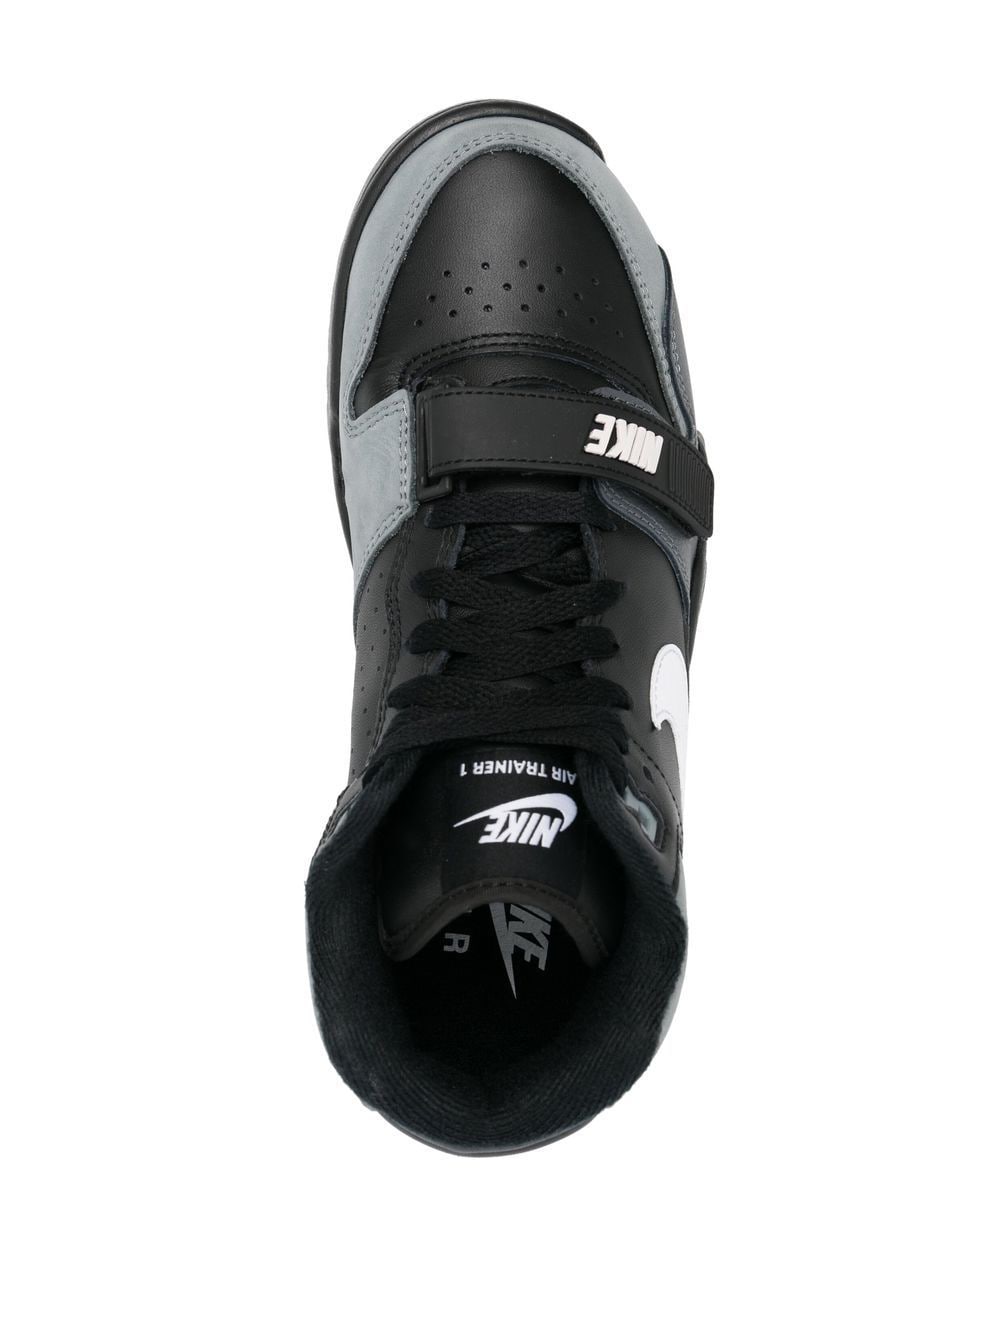 Shop Nike Air Trainer 1 "black/grey" Sneakers